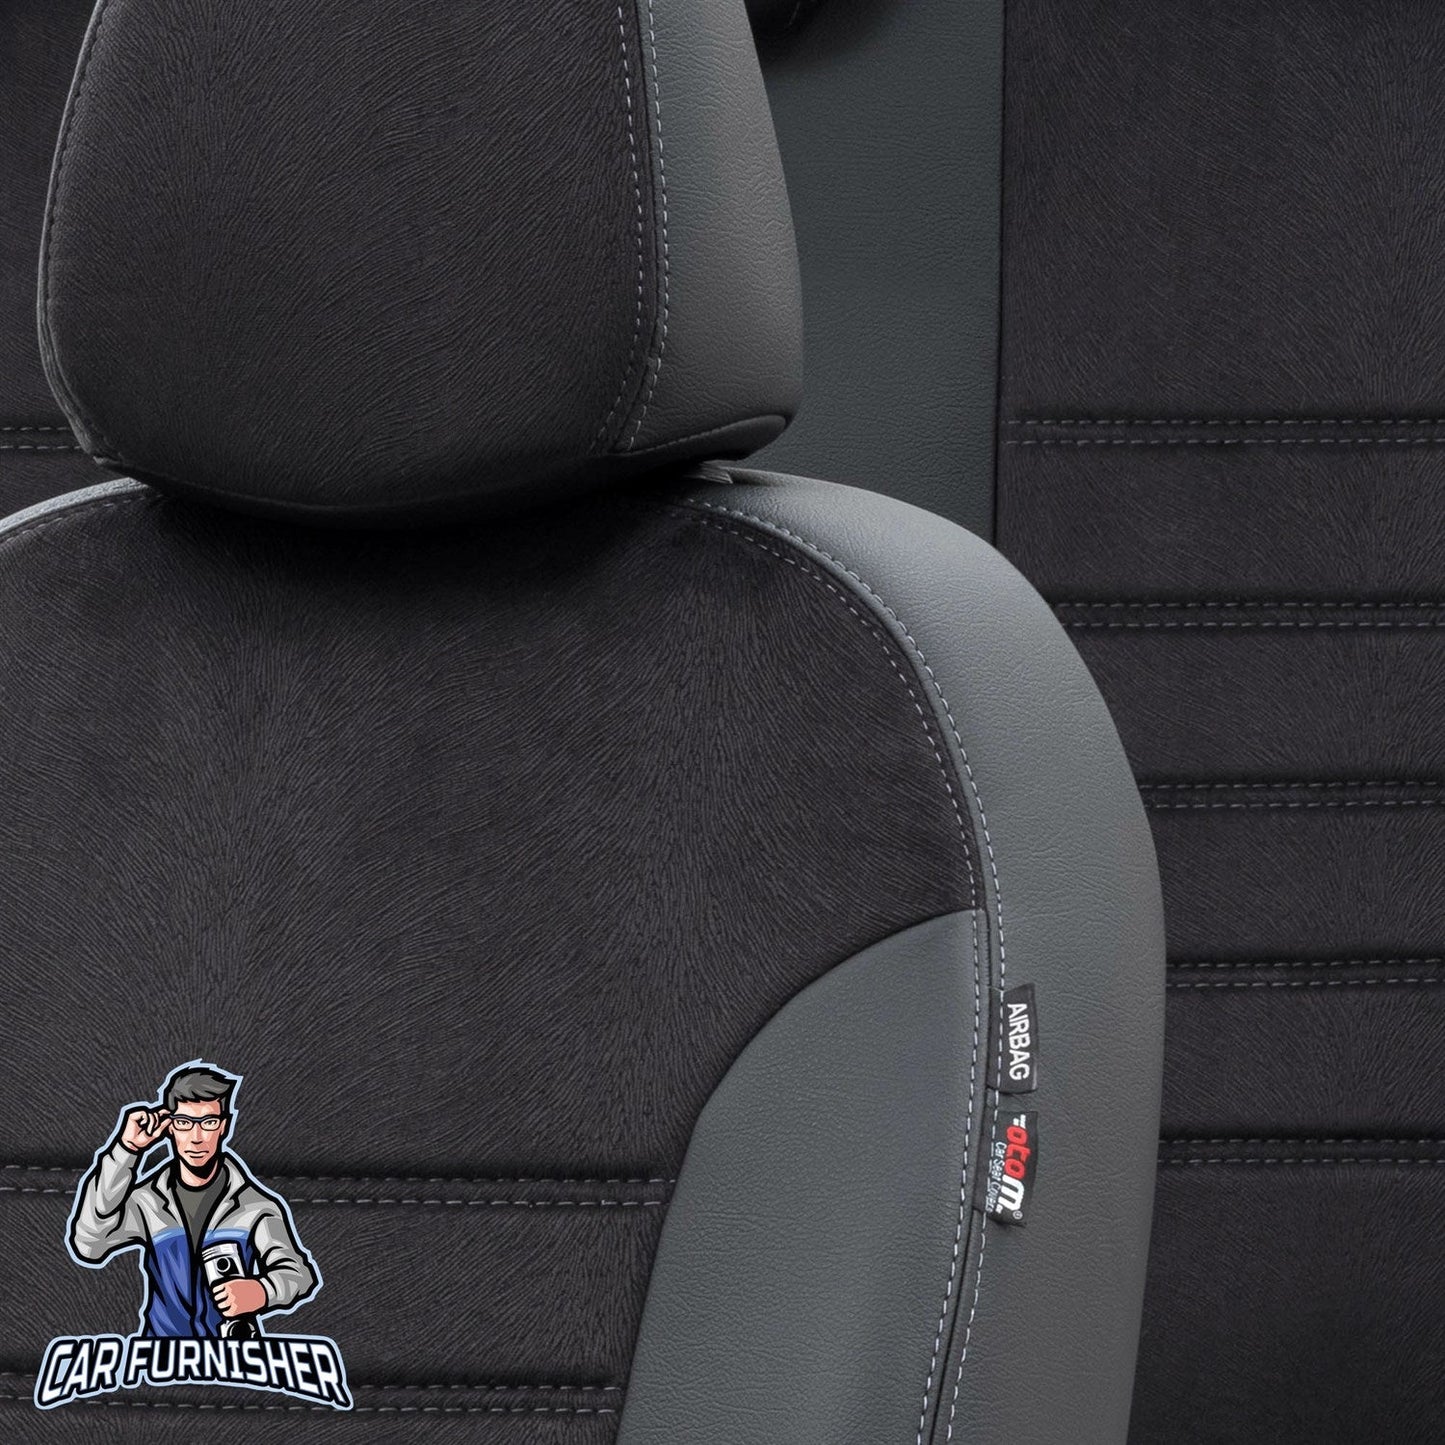 Dacia Sandero Seat Covers London Foal Feather Design Black Leather & Foal Feather